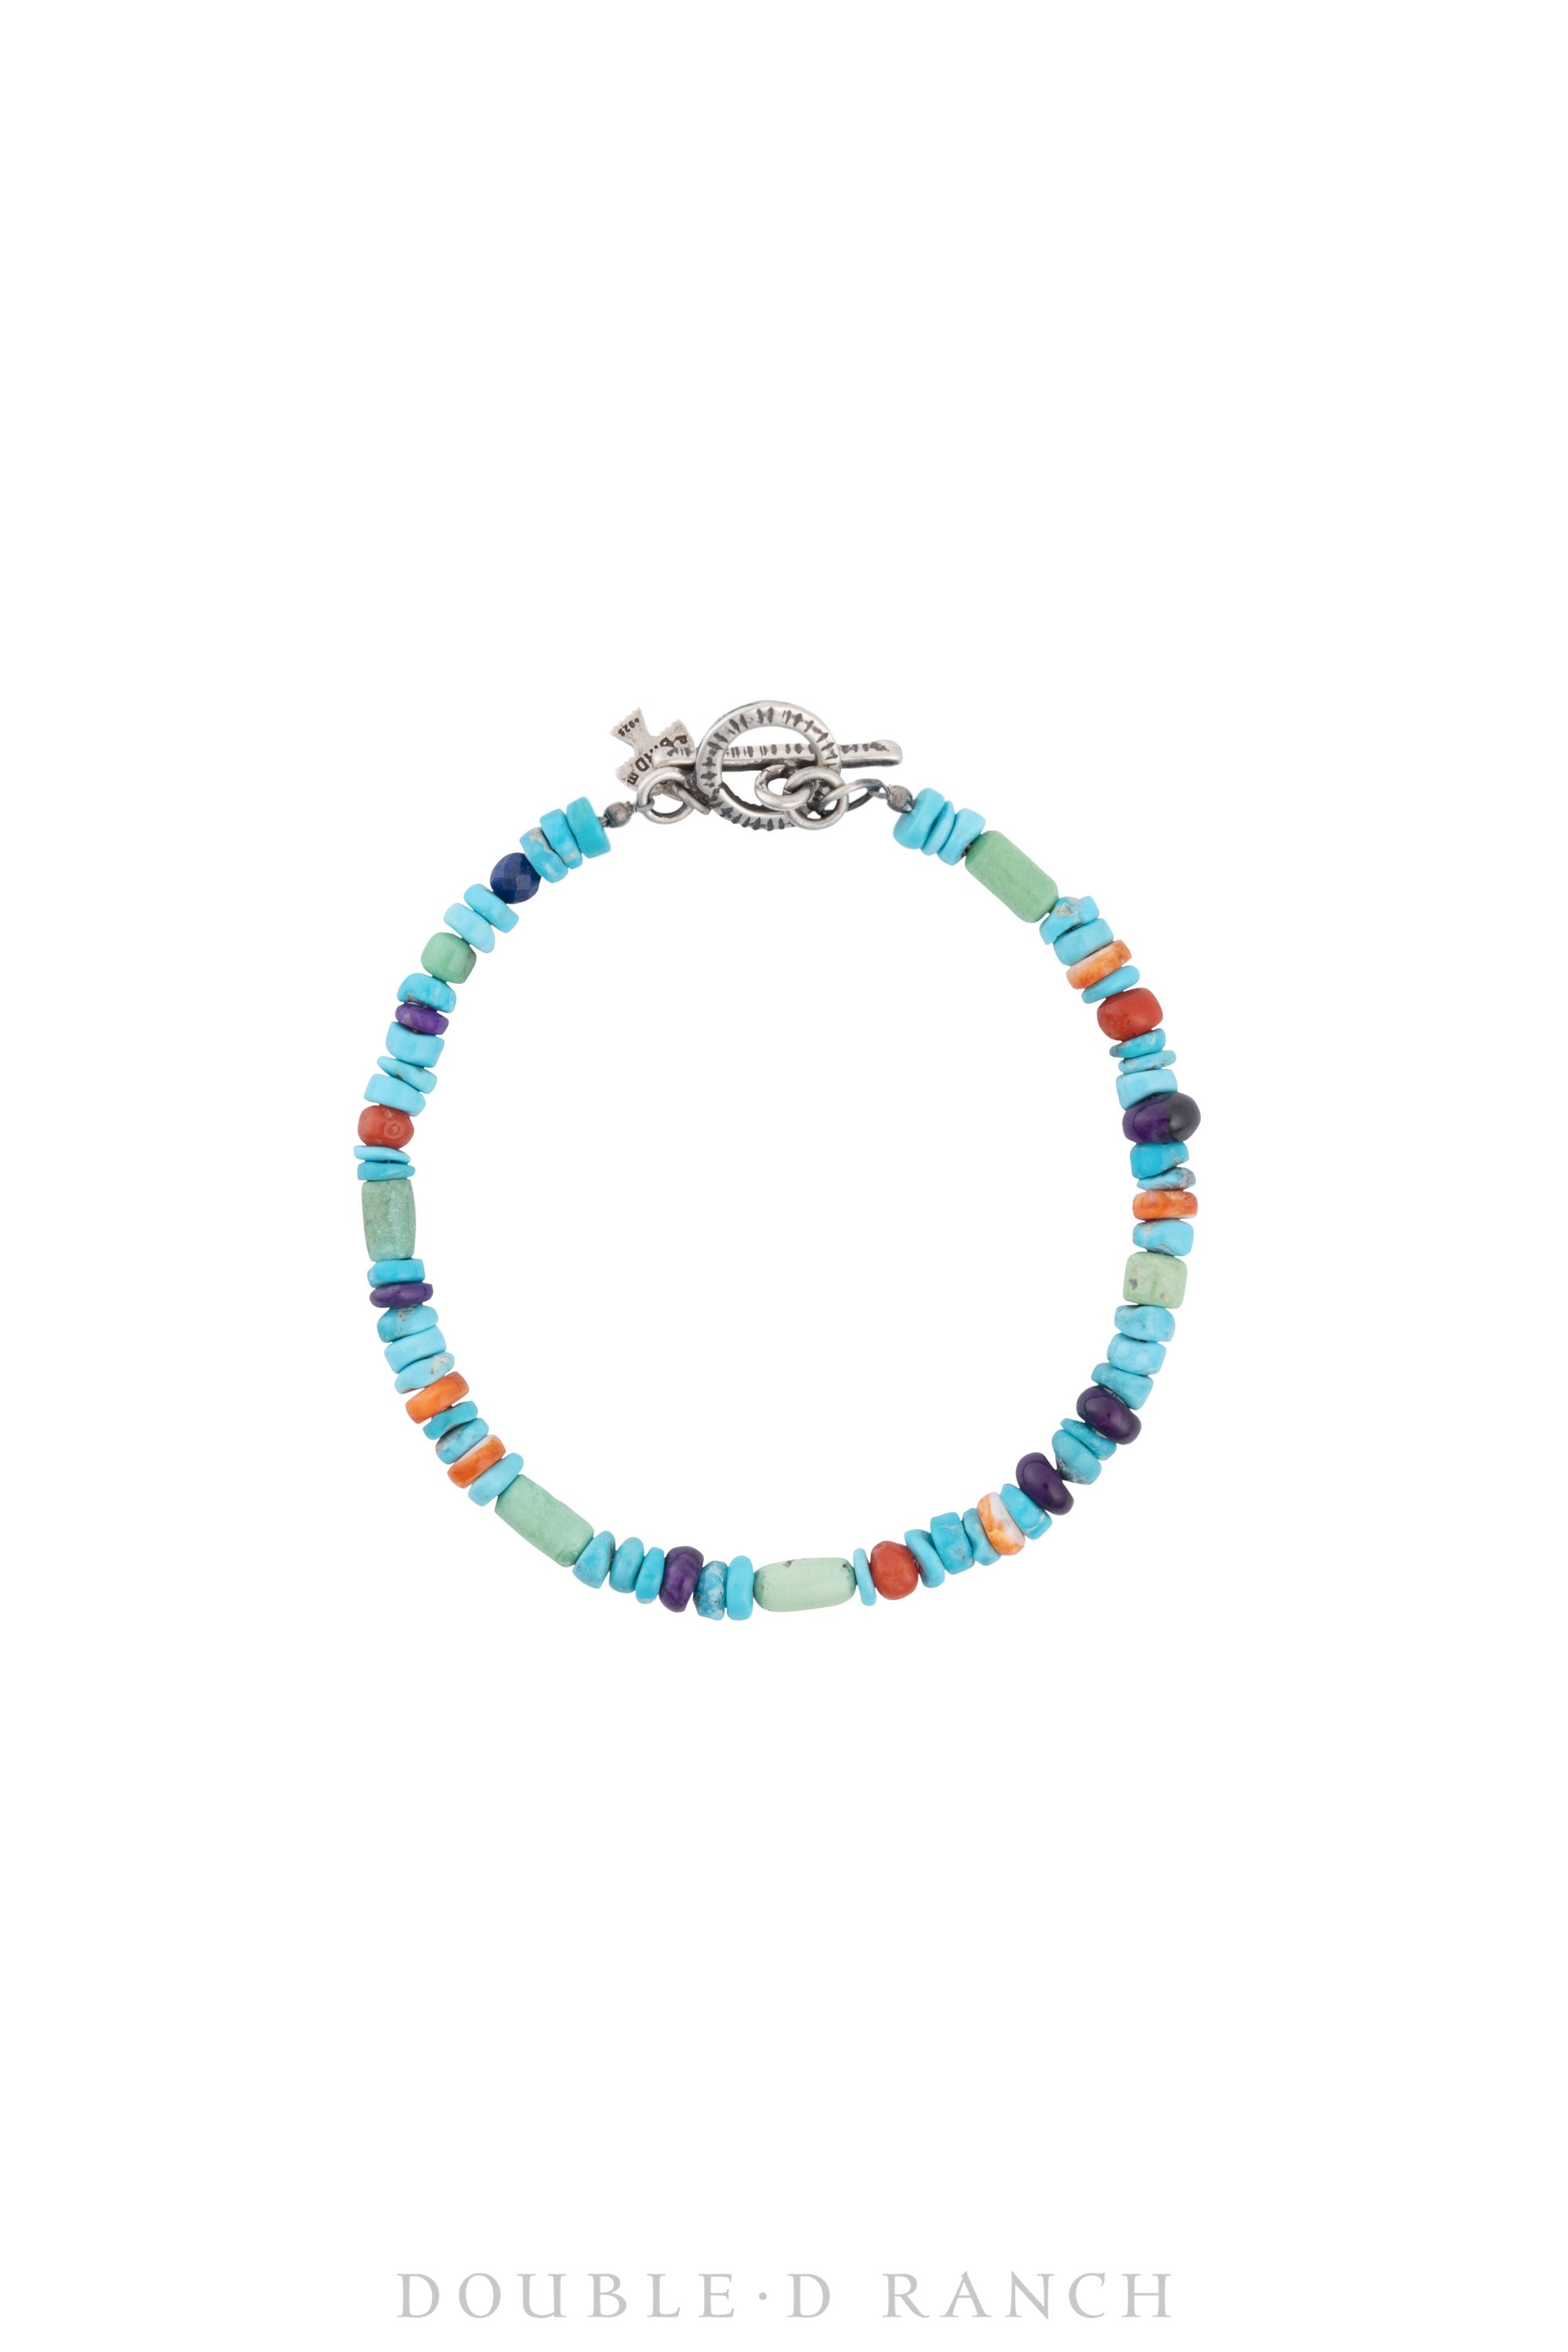 Bracelet, Stone Bead, Mixed Stones, Hallmark, Contemporary, 3568